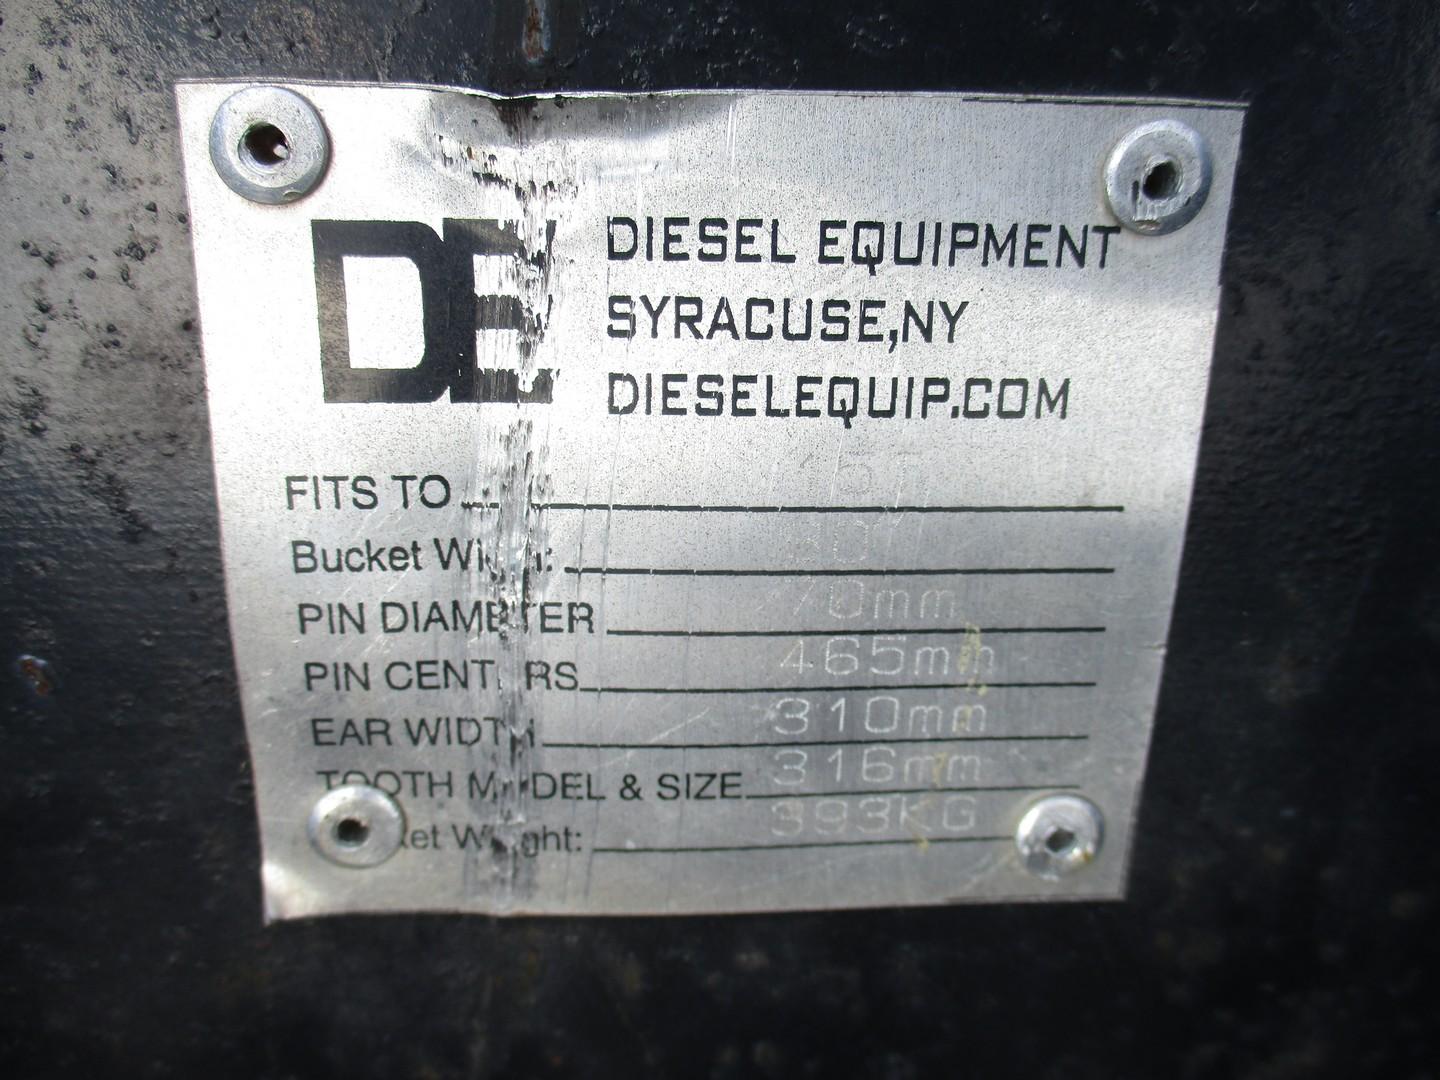 Diesel 30" Excavator Bucket